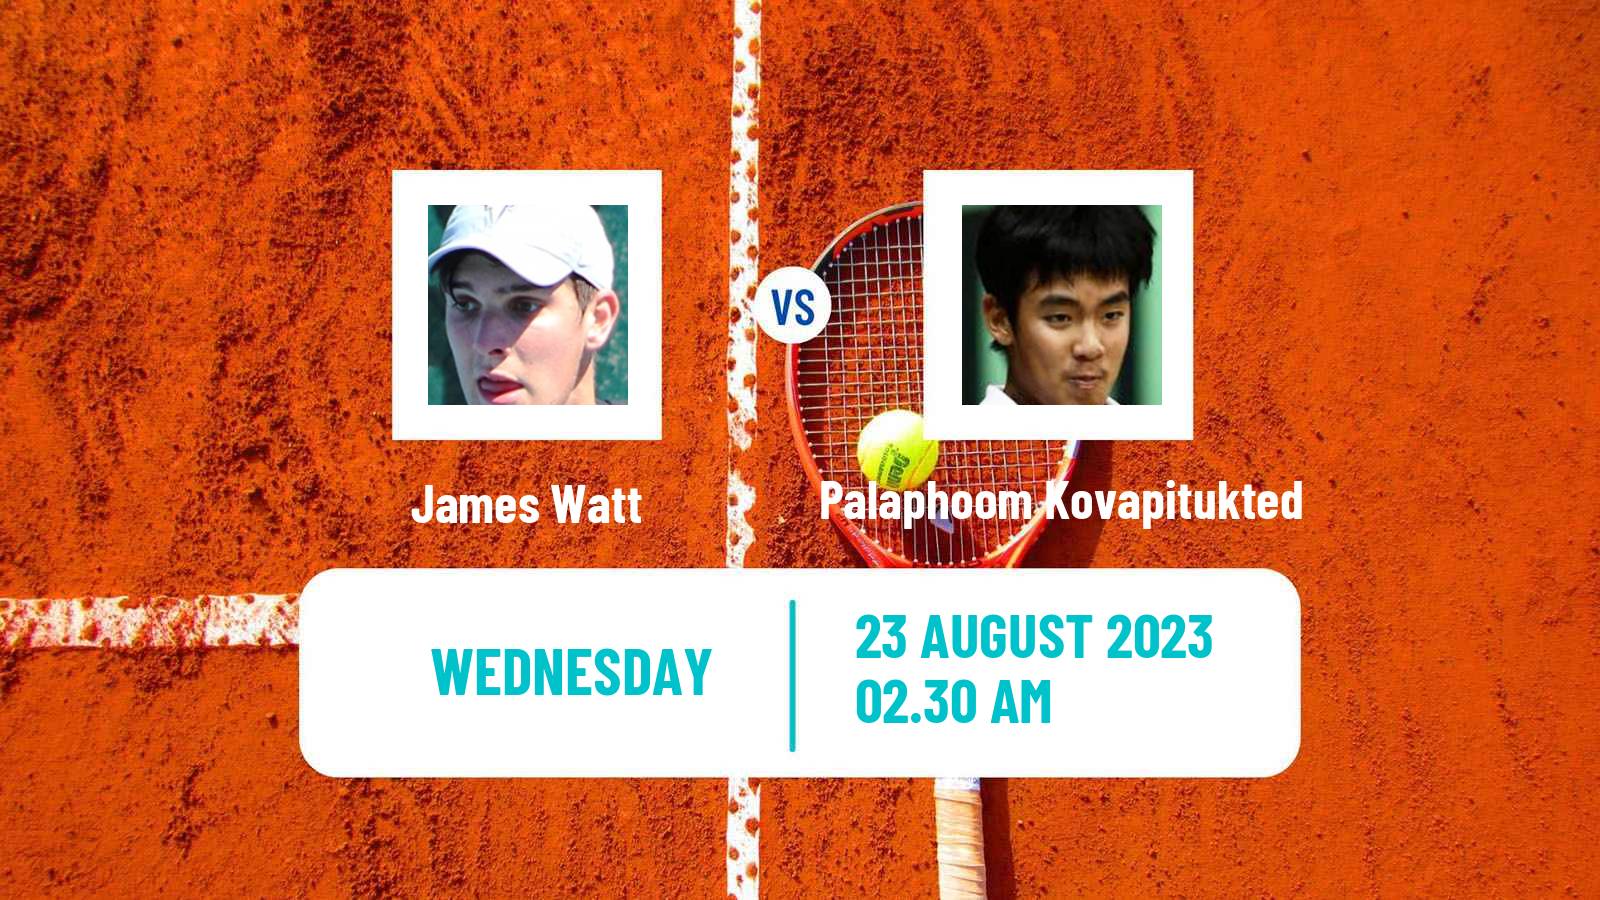 Tennis ITF M15 Nakhon Si Thammarat 6 Men James Watt - Palaphoom Kovapitukted